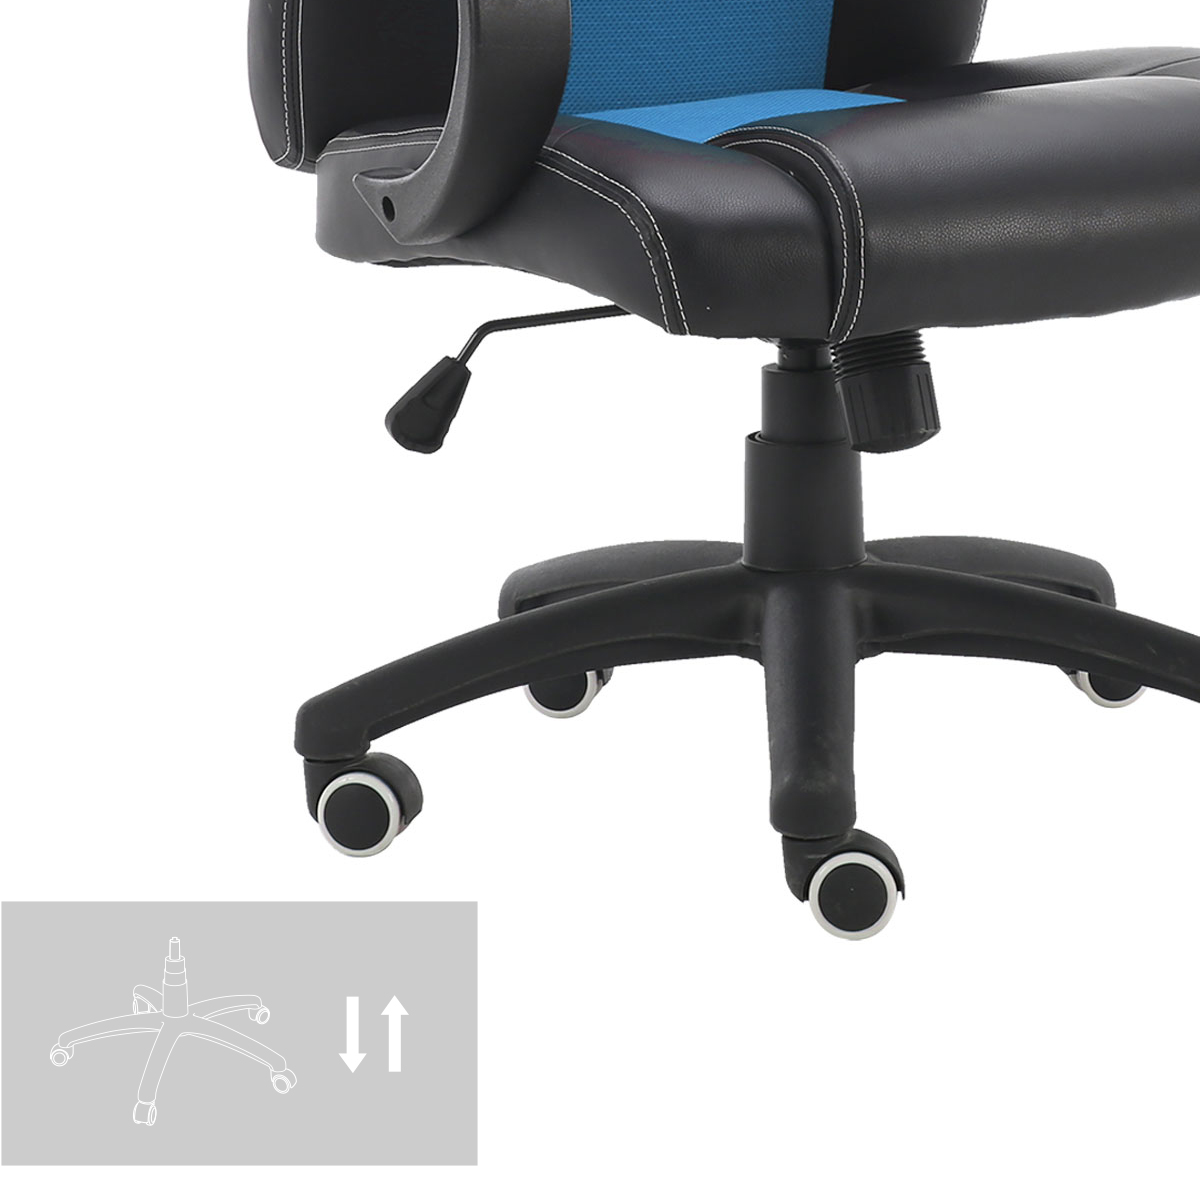 PRIXTON Draco Gaming-Stuhl, blau